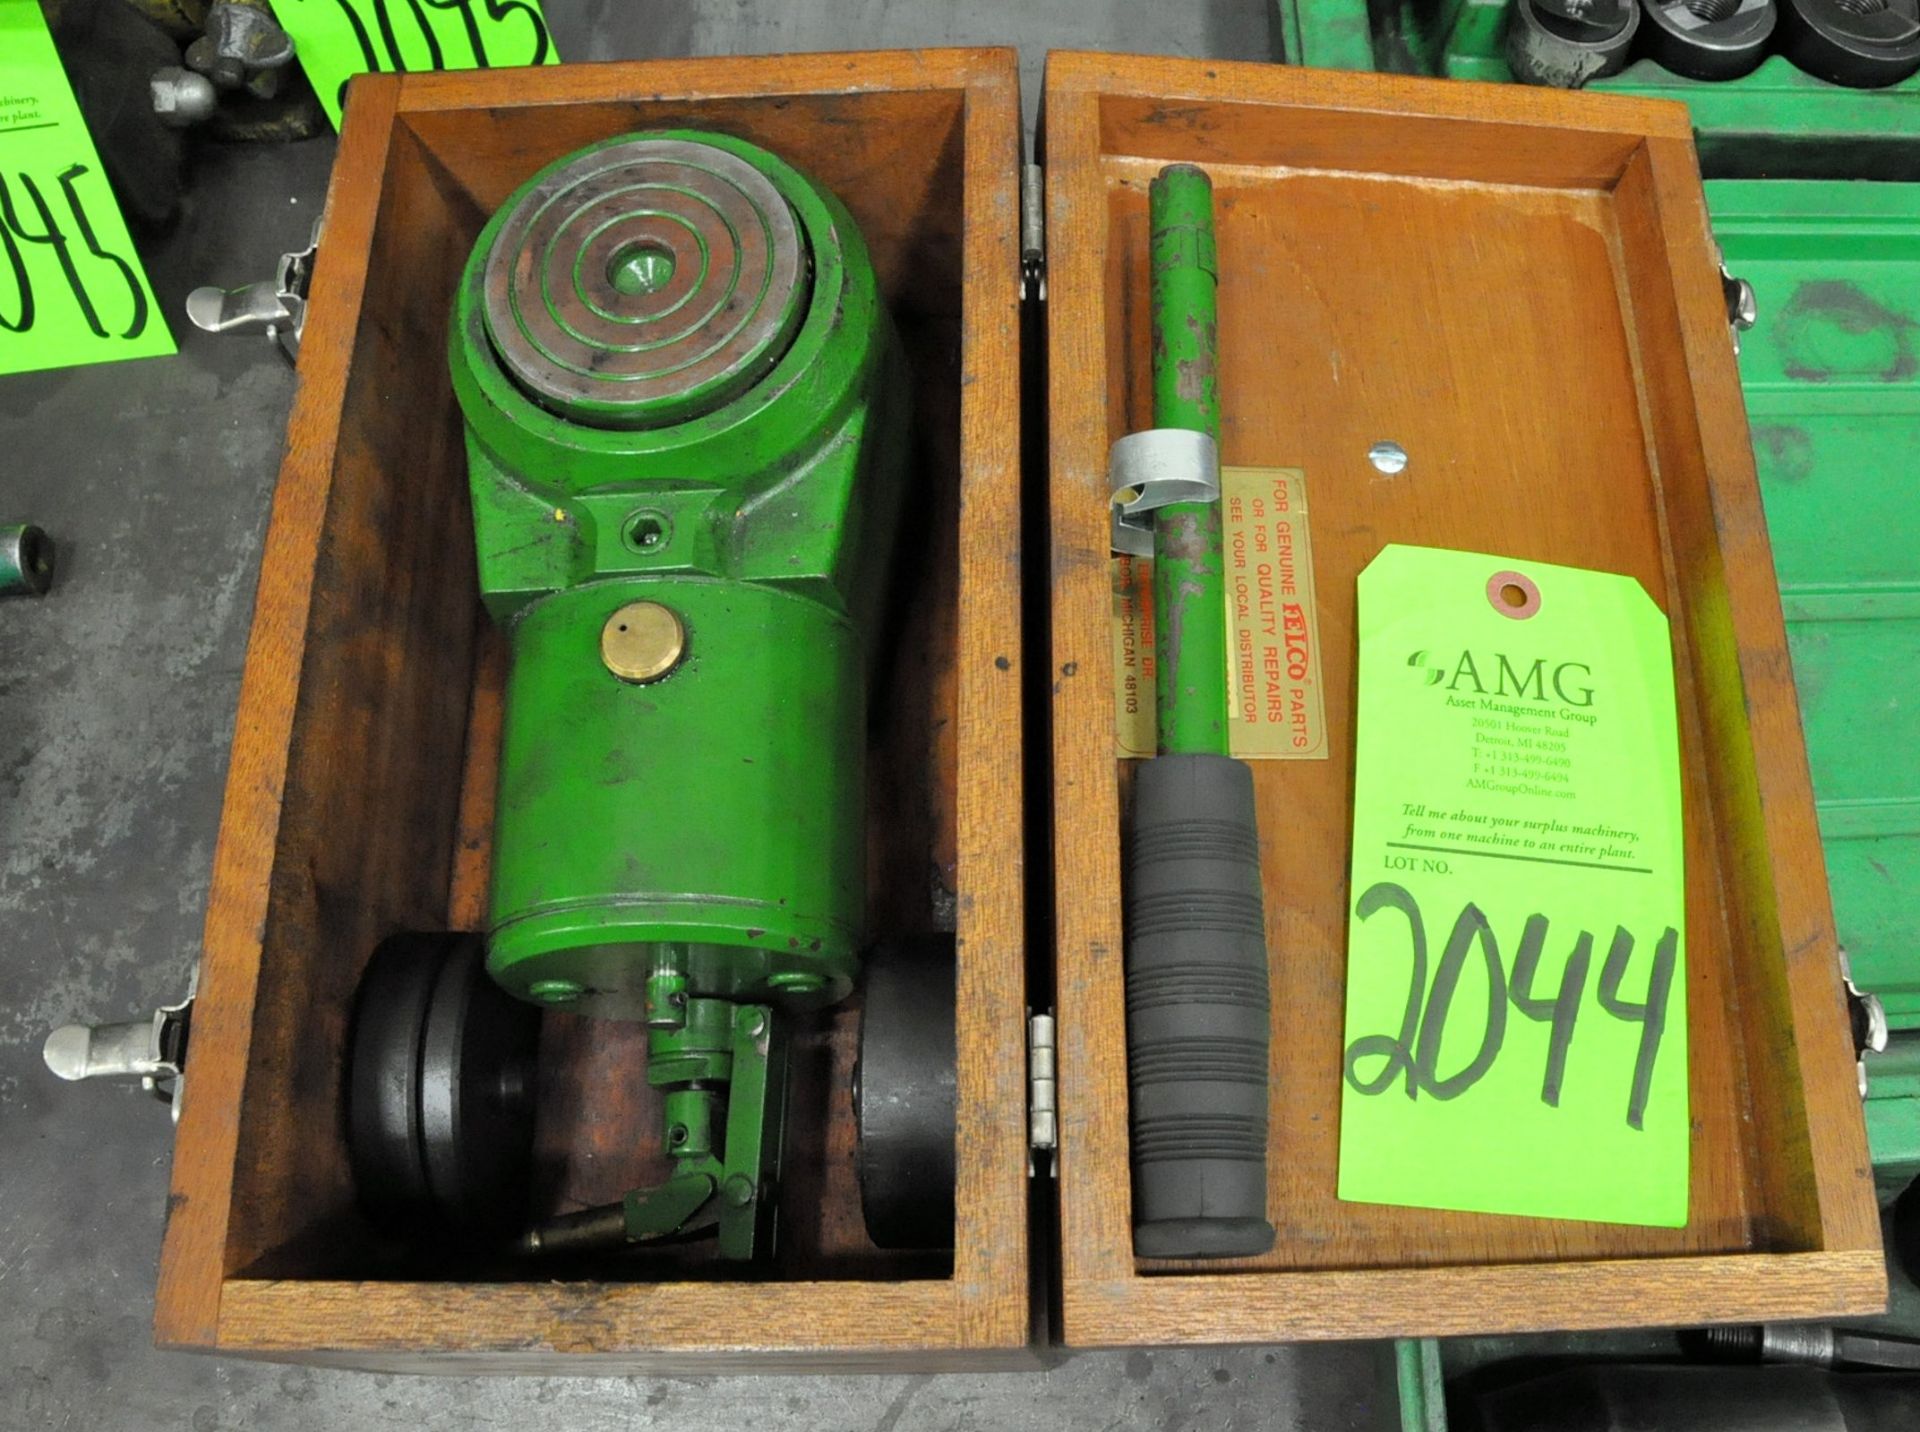 Felco 30-Ton Capacity Hydraulic Jack with Case, (G-20), (Green Tag)